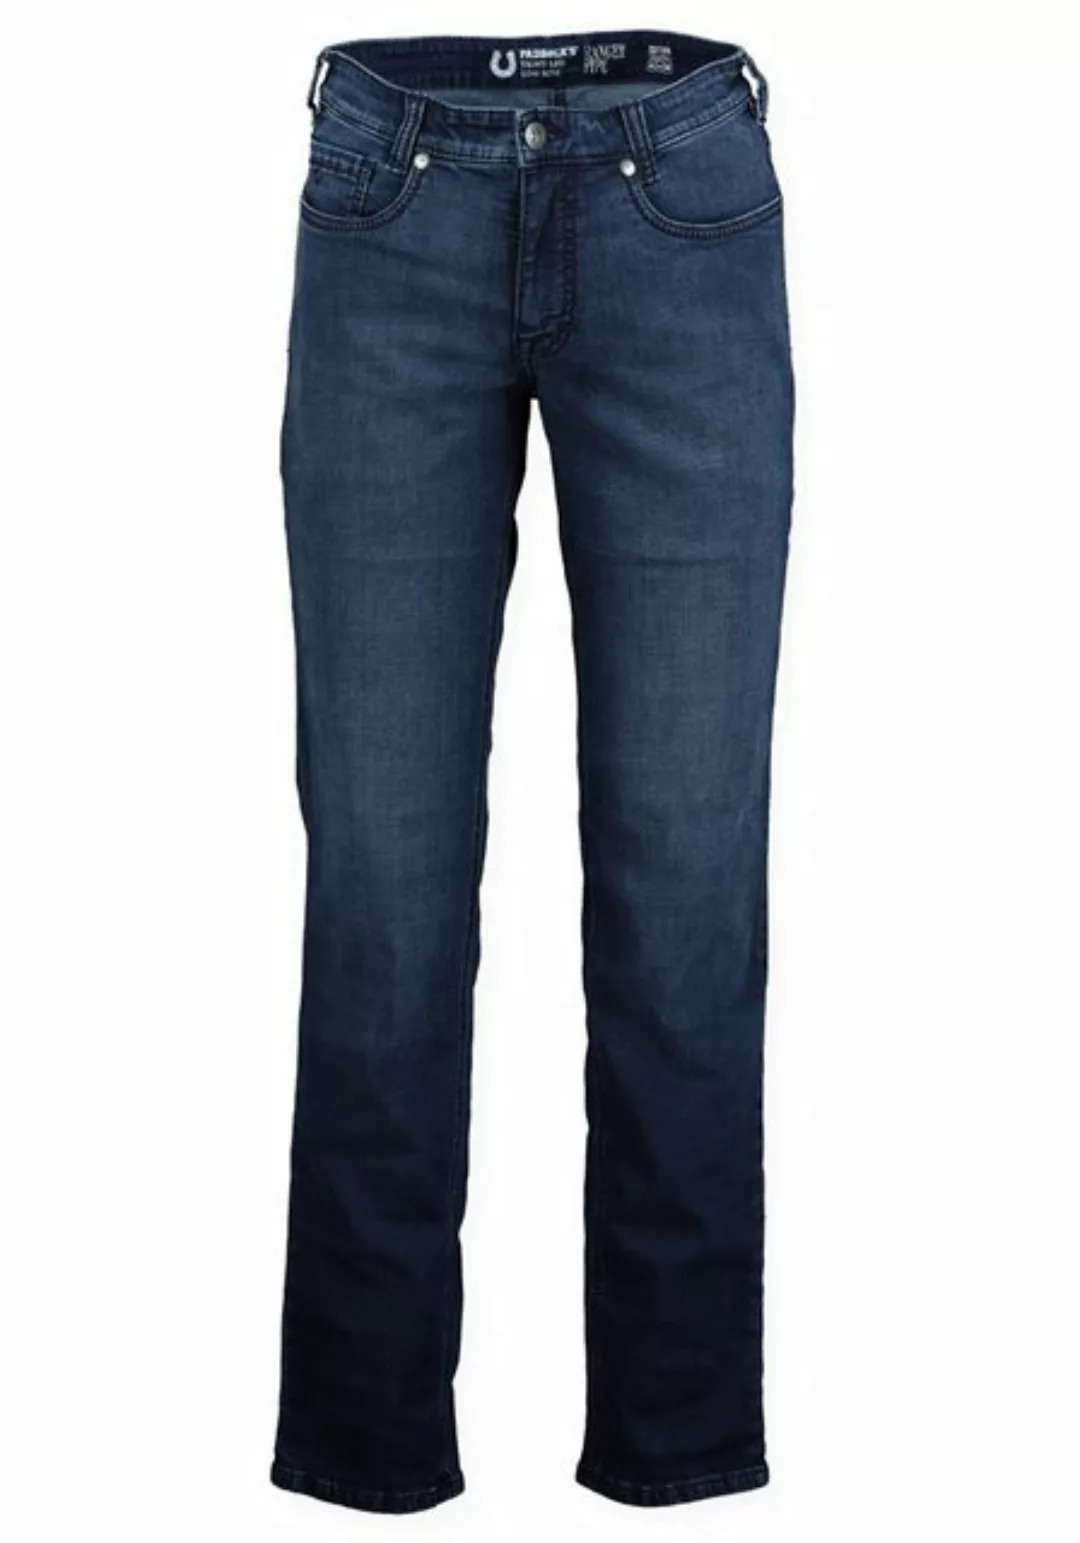 Paddock's 5-Pocket-Jeans PADDOCKS RANGER PIPE Saddle Stitch dark blue used günstig online kaufen